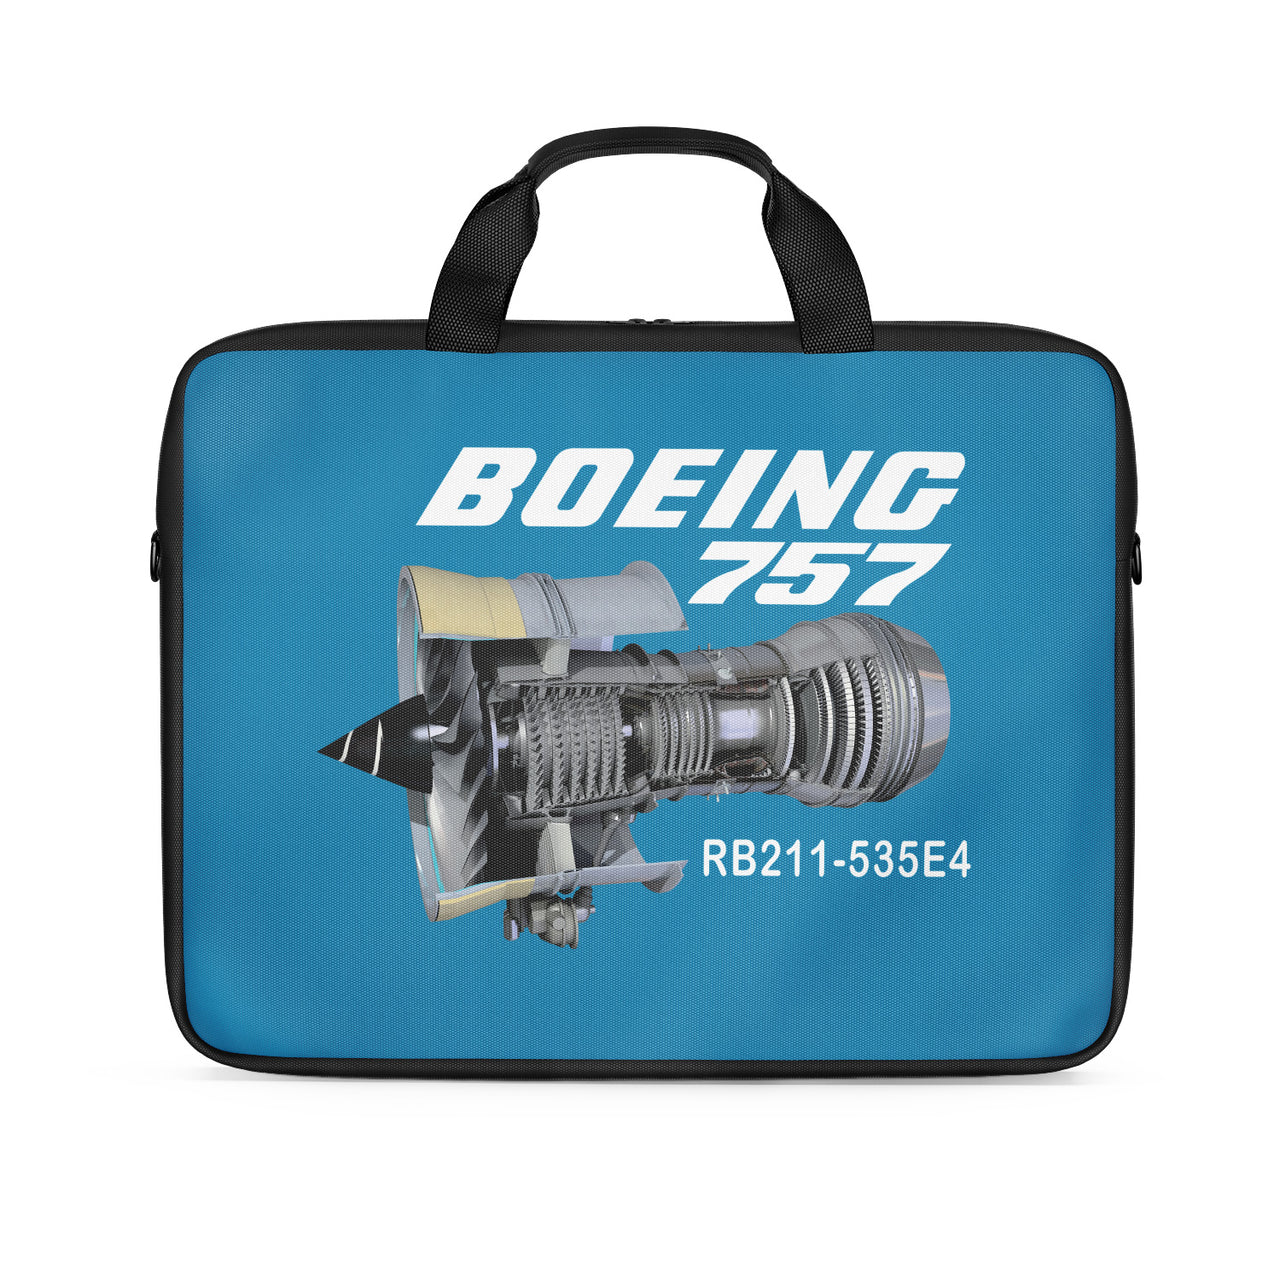 Boeing 757 & Rolls Royce Engine (RB211) Designed Laptop & Tablet Bags